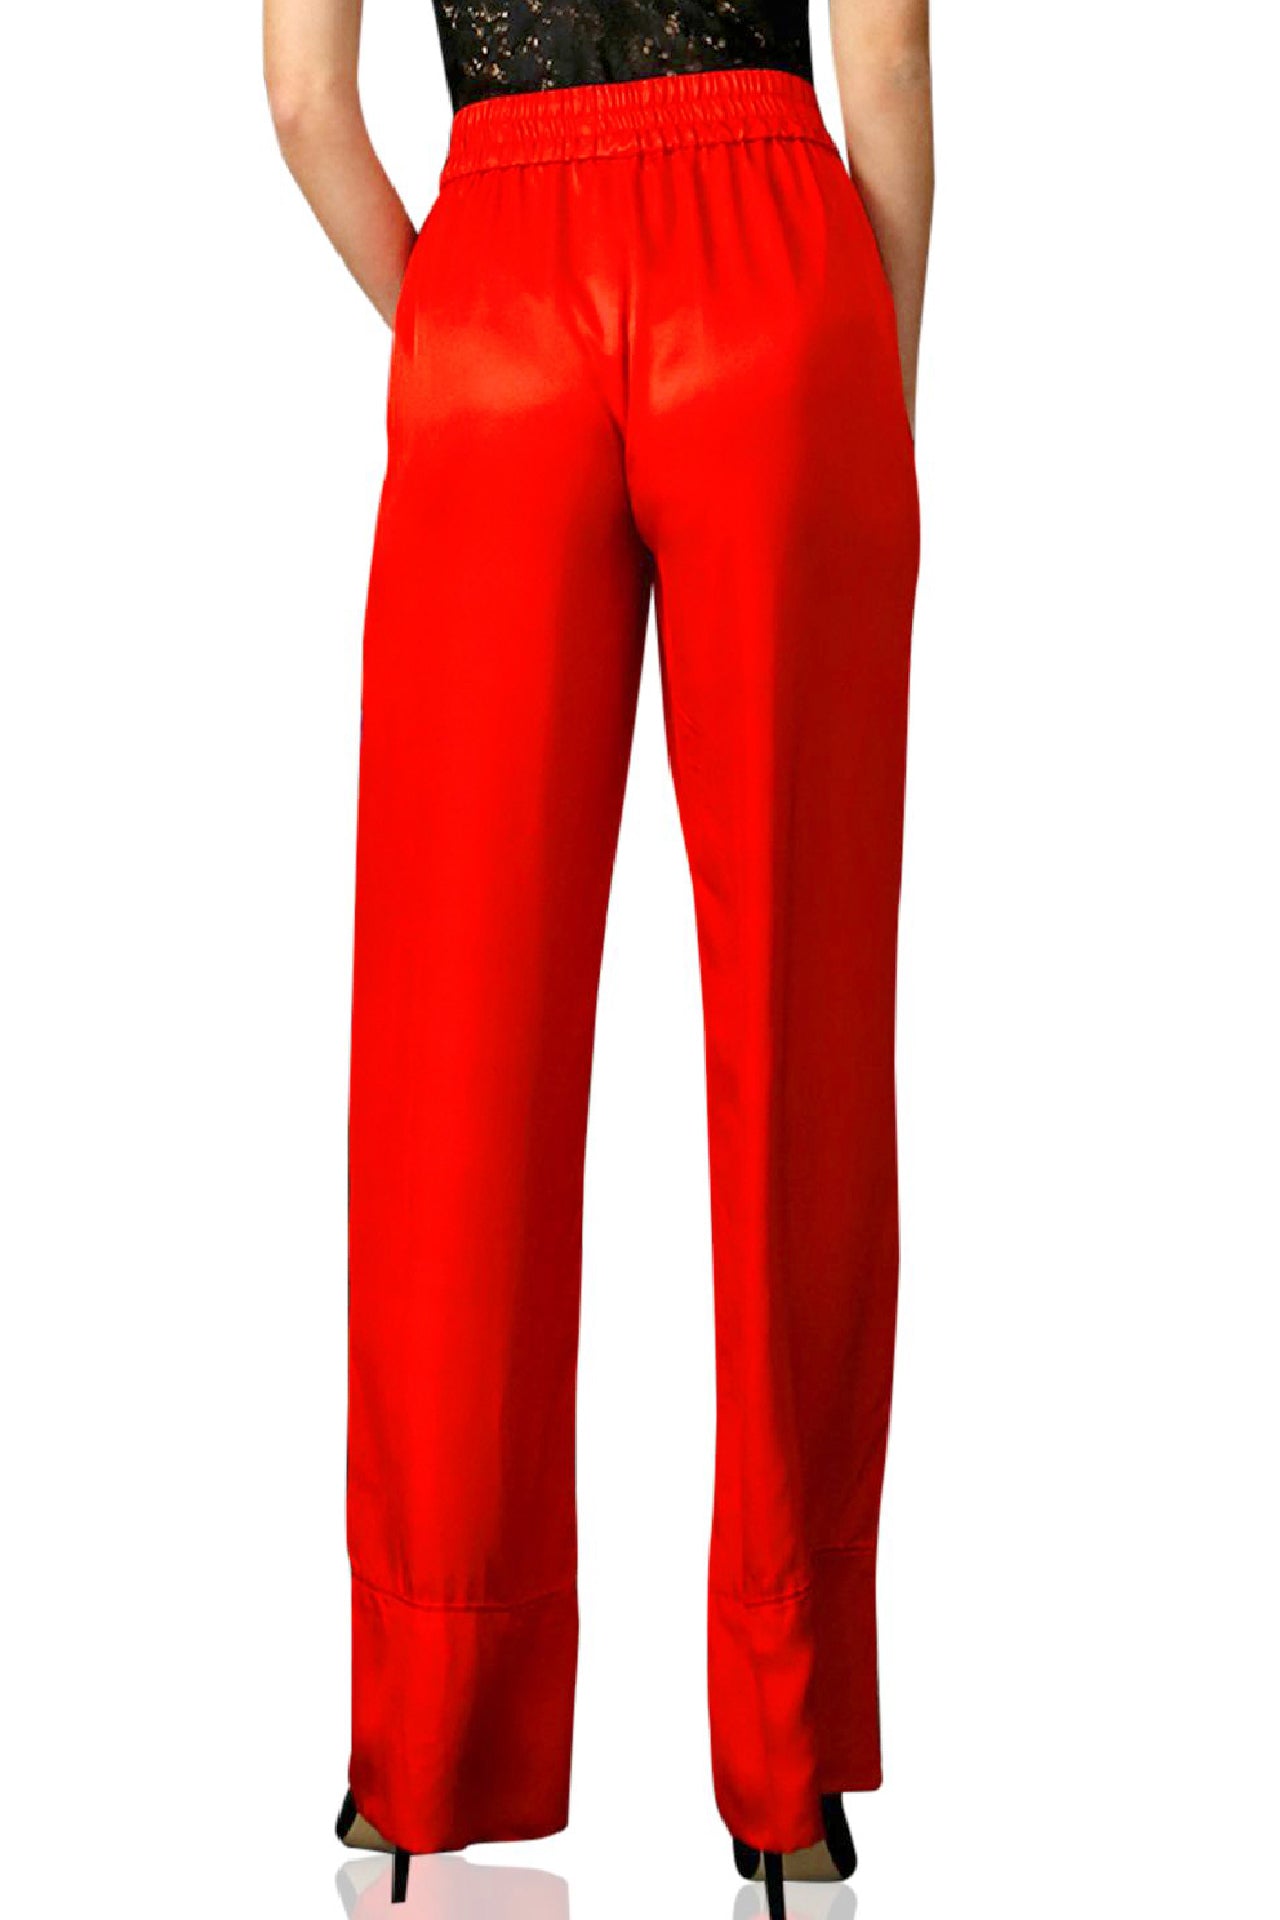 Silk Straight Pants||Silk Pants|Designer Pants|Silk Pants For Women X Shahida – Kyle x Shahida